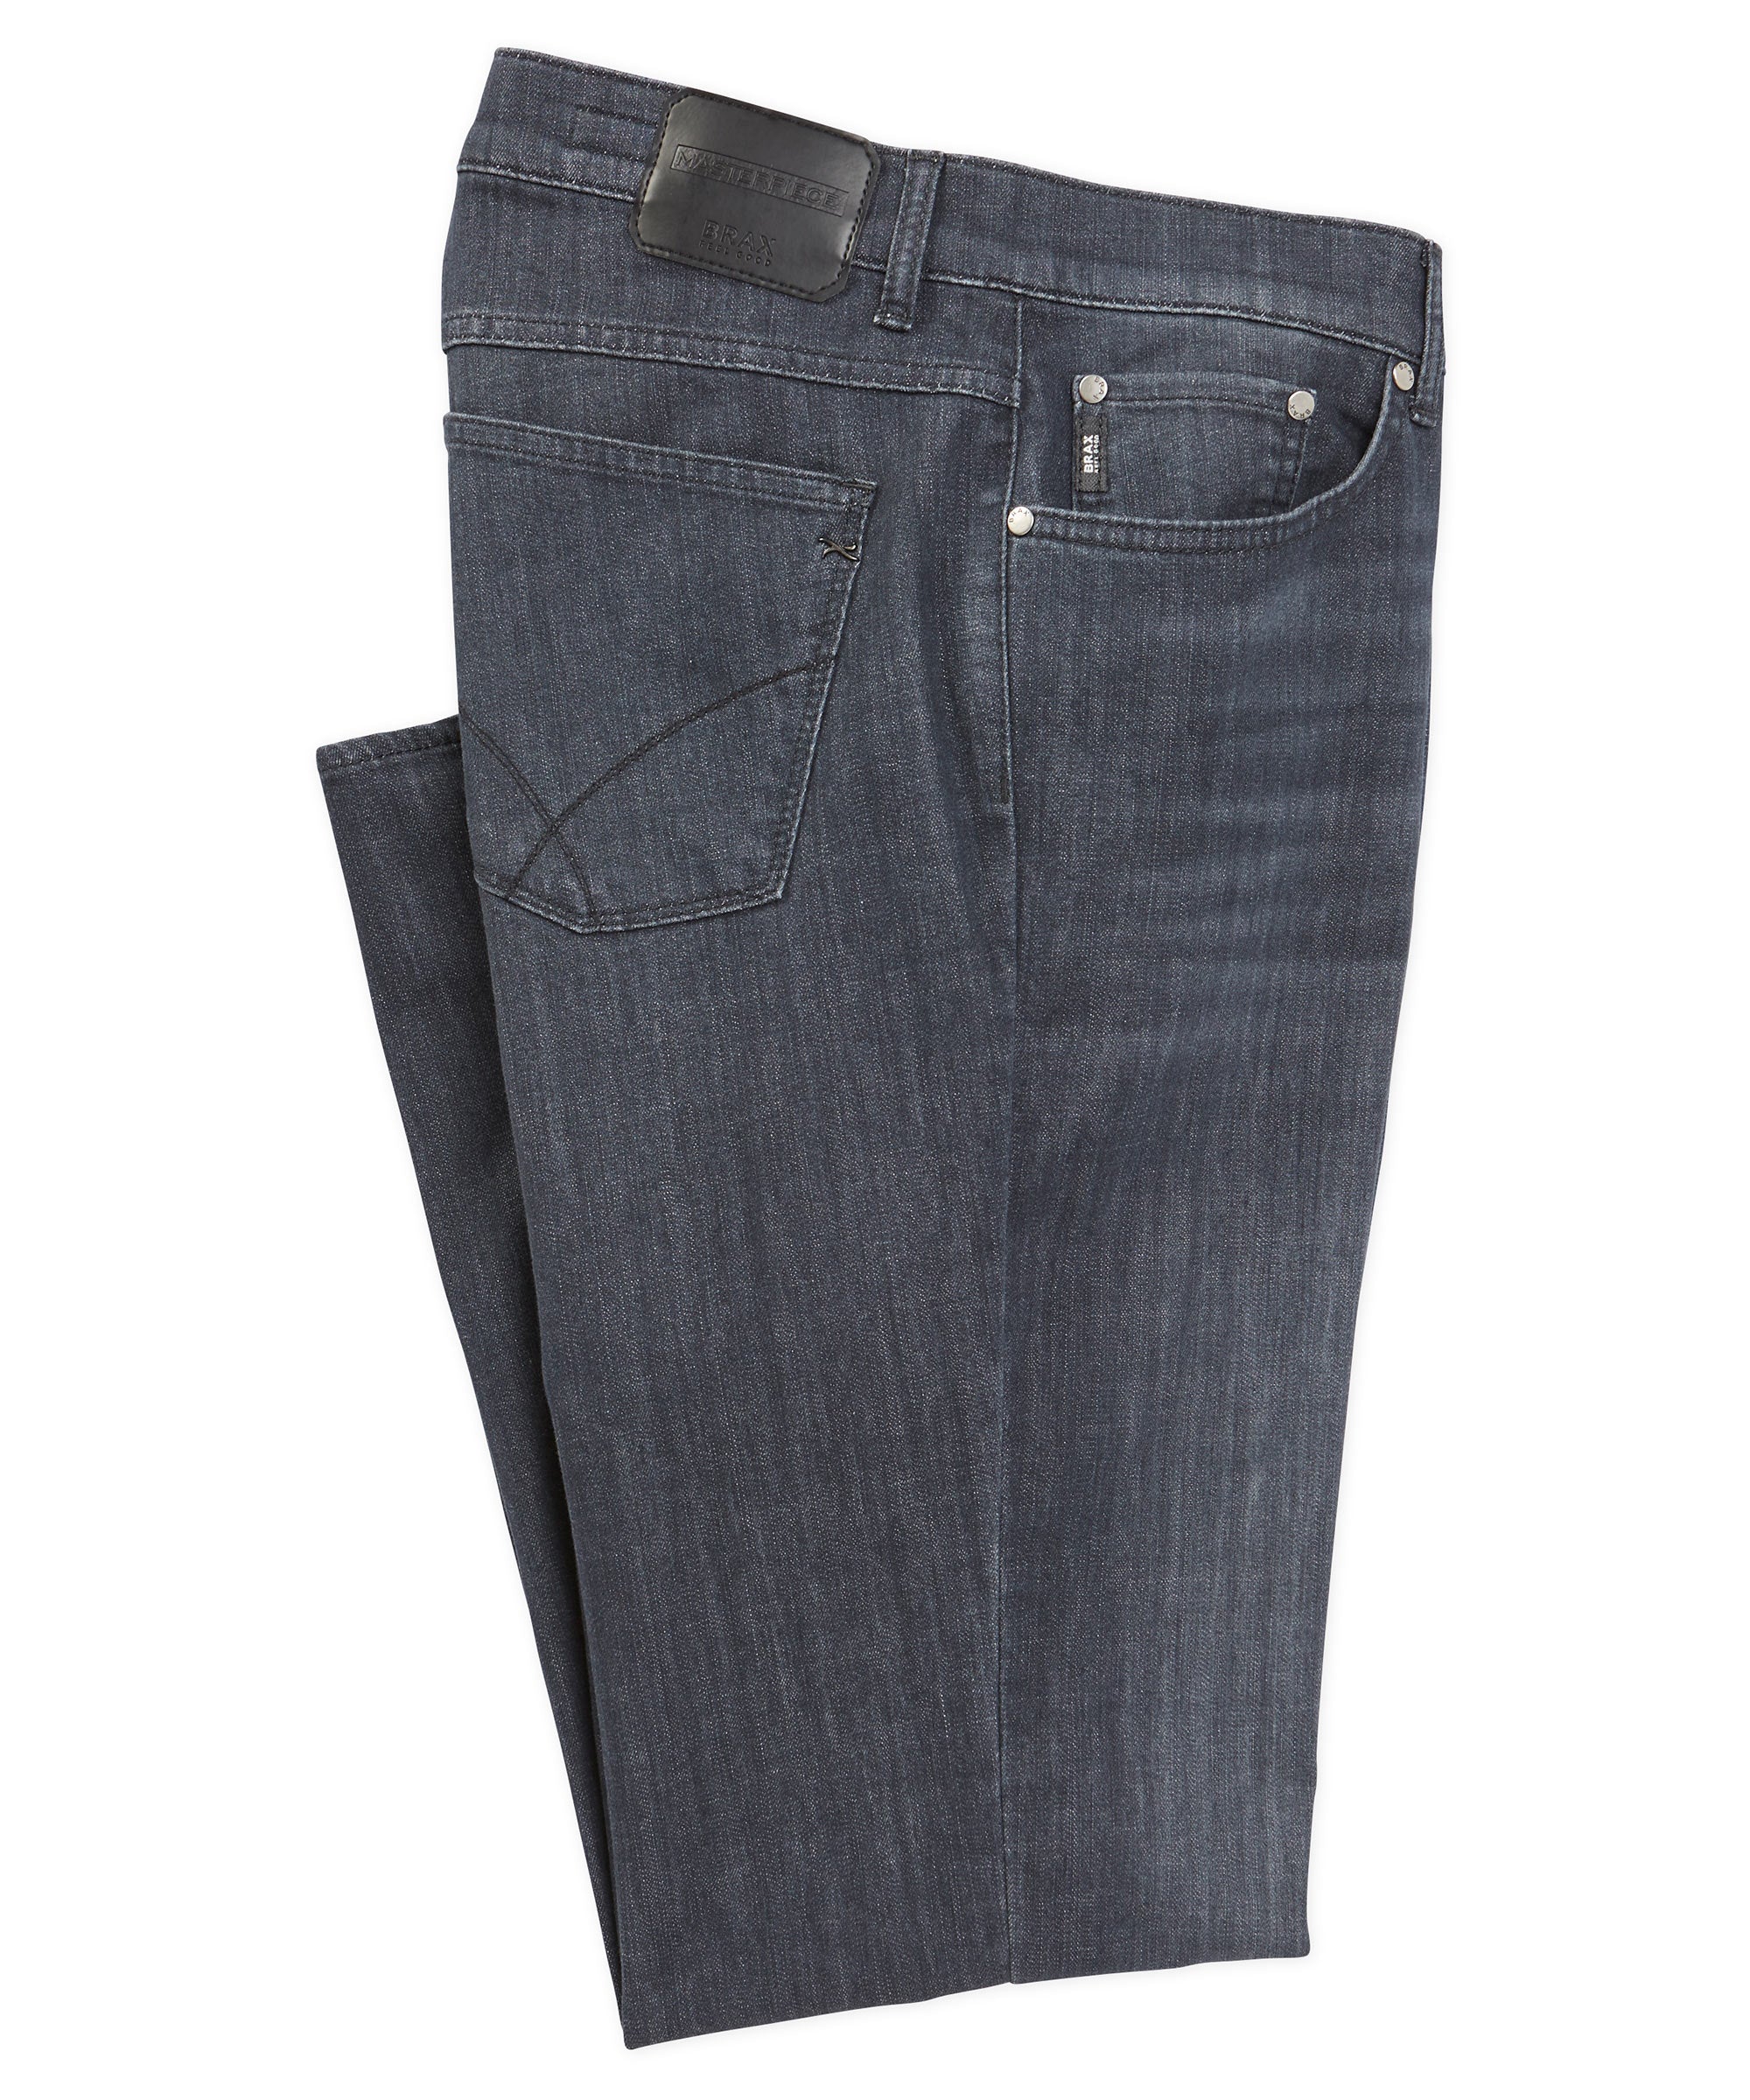 Men Jeans Style COOPER DENIM blue black REGULAR